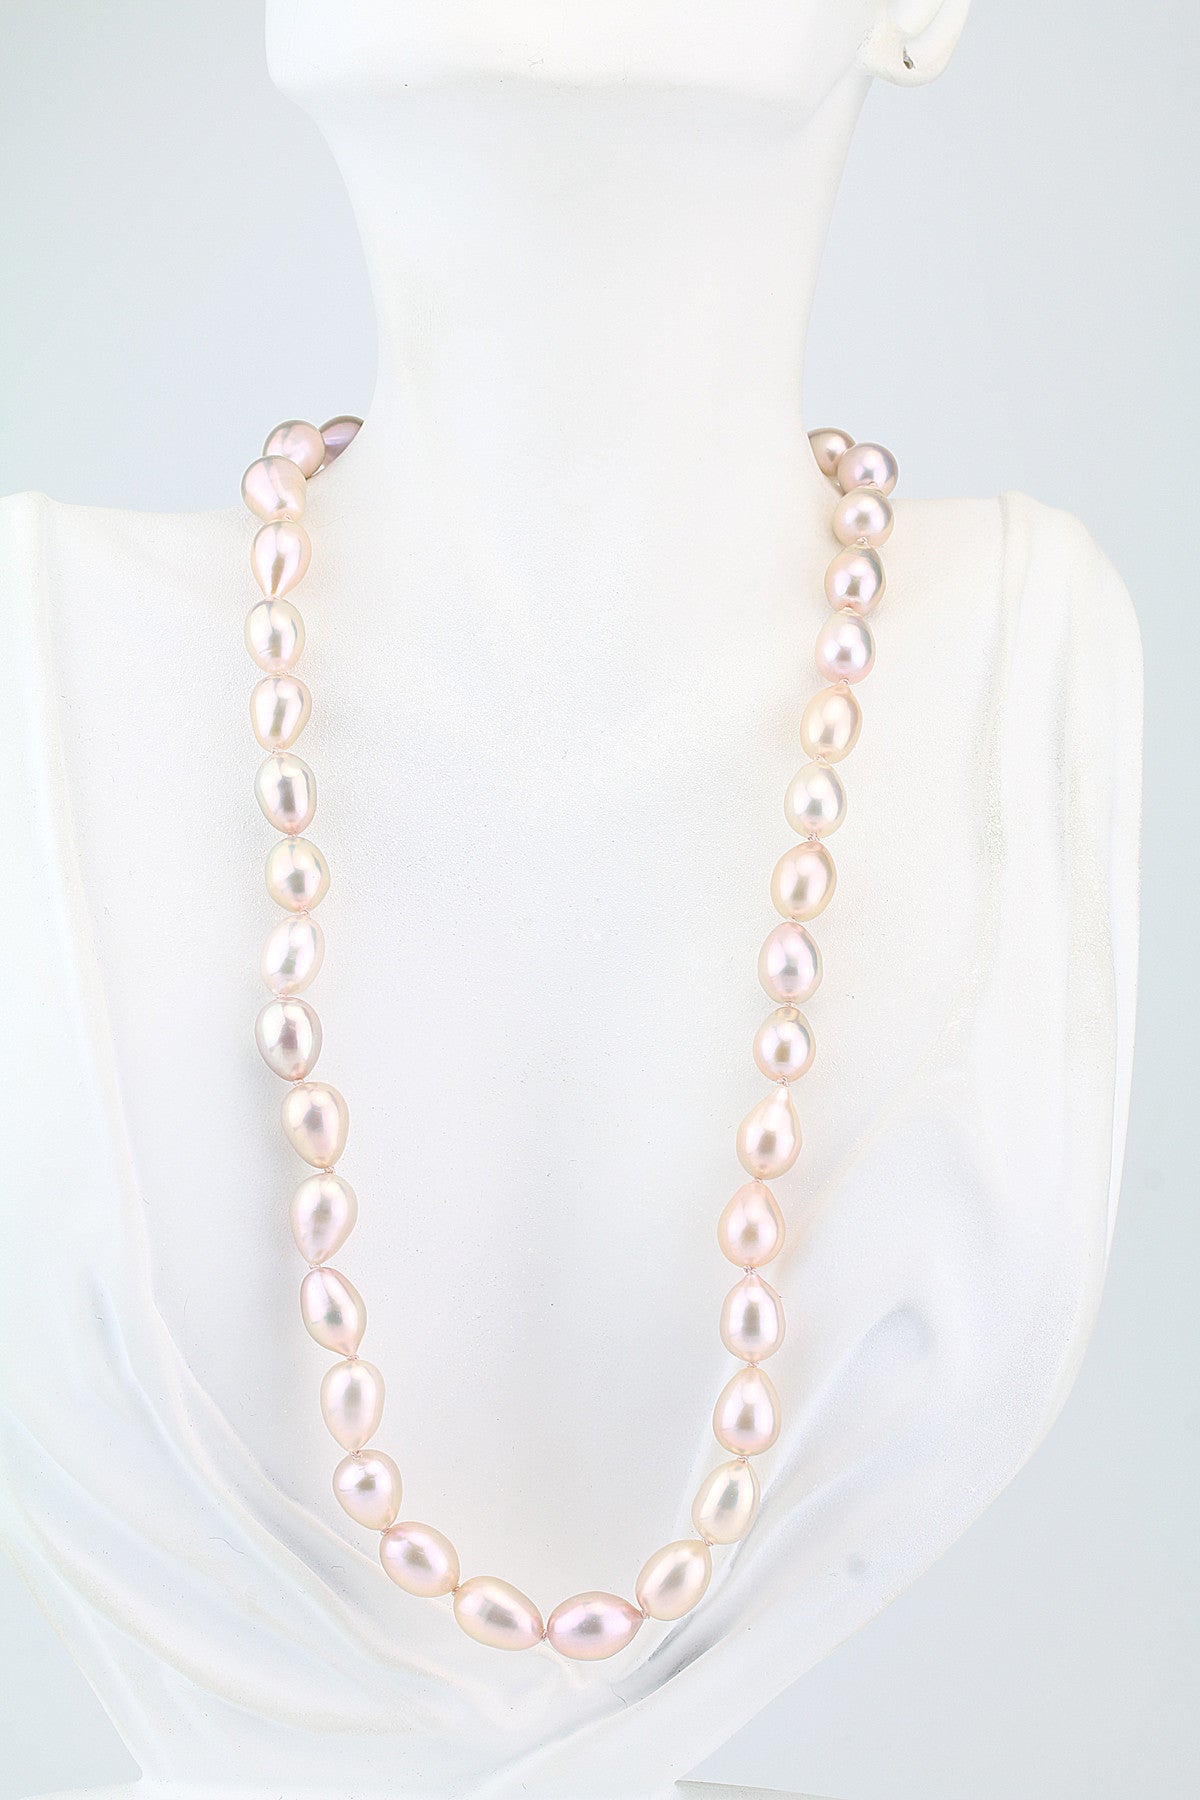 Peach Teardrop Freshwater Pearl Necklace 18"